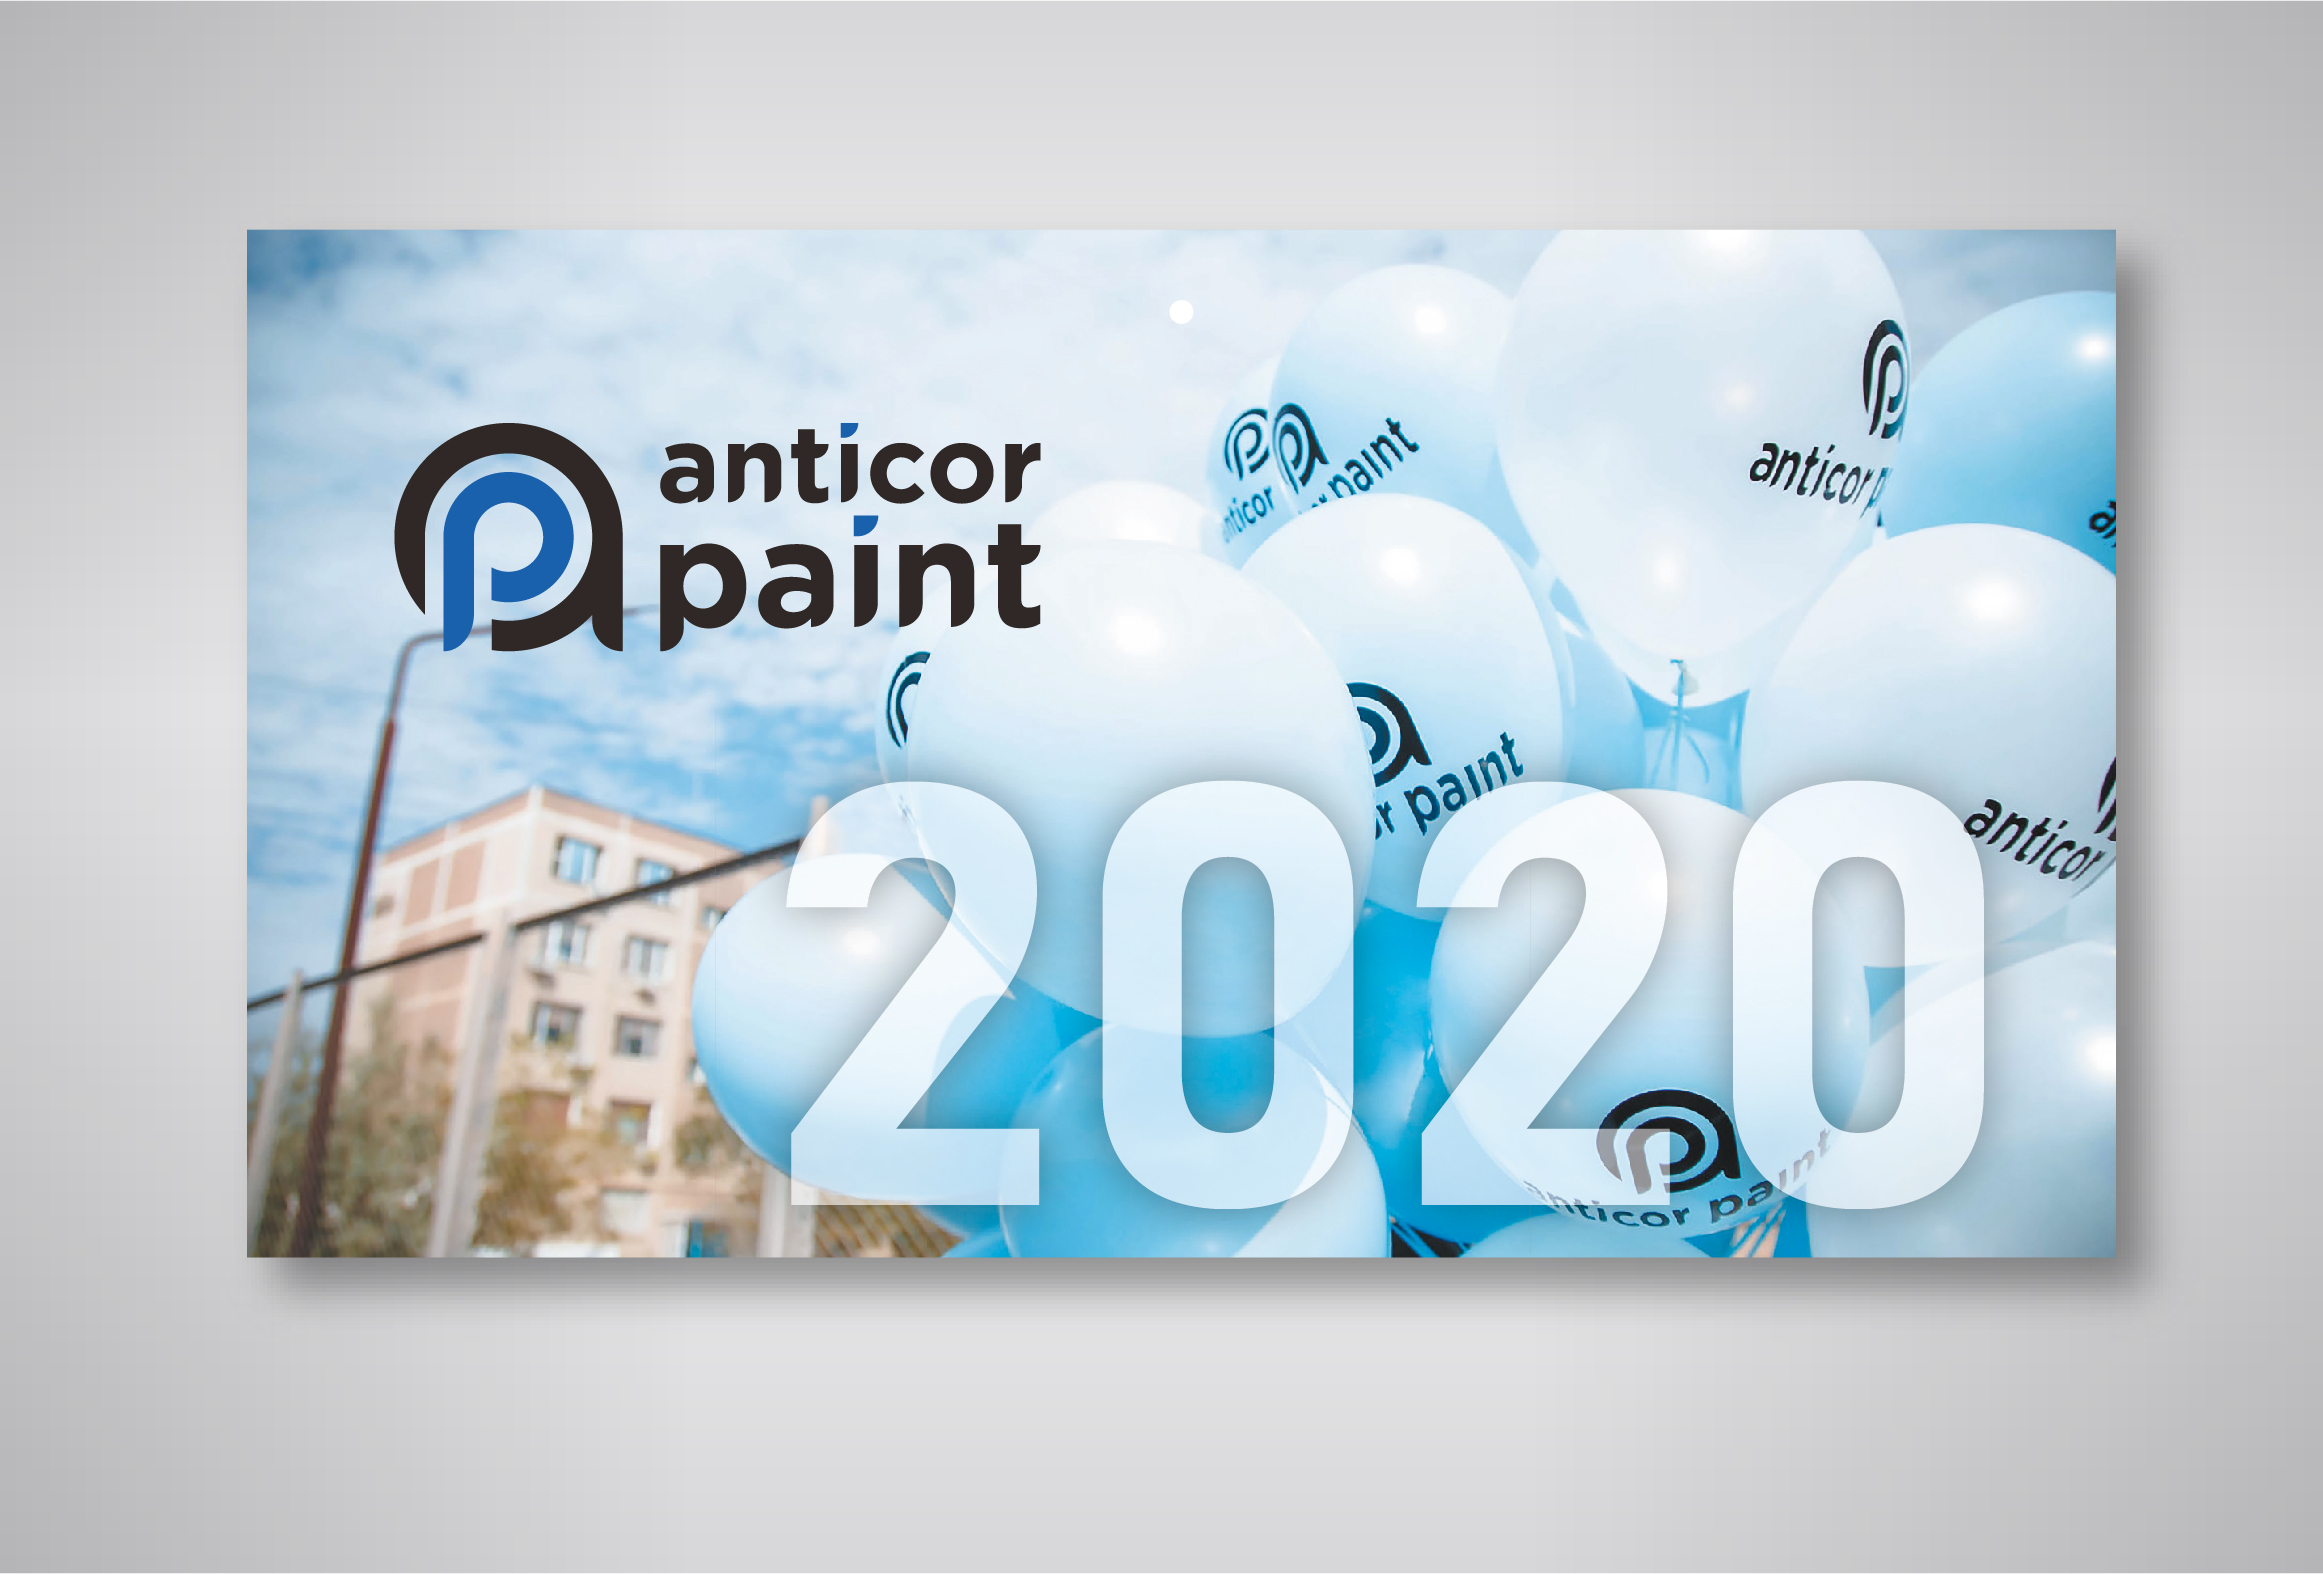 Anticor paint, брендирование, адаптация, календарь, полиграфия